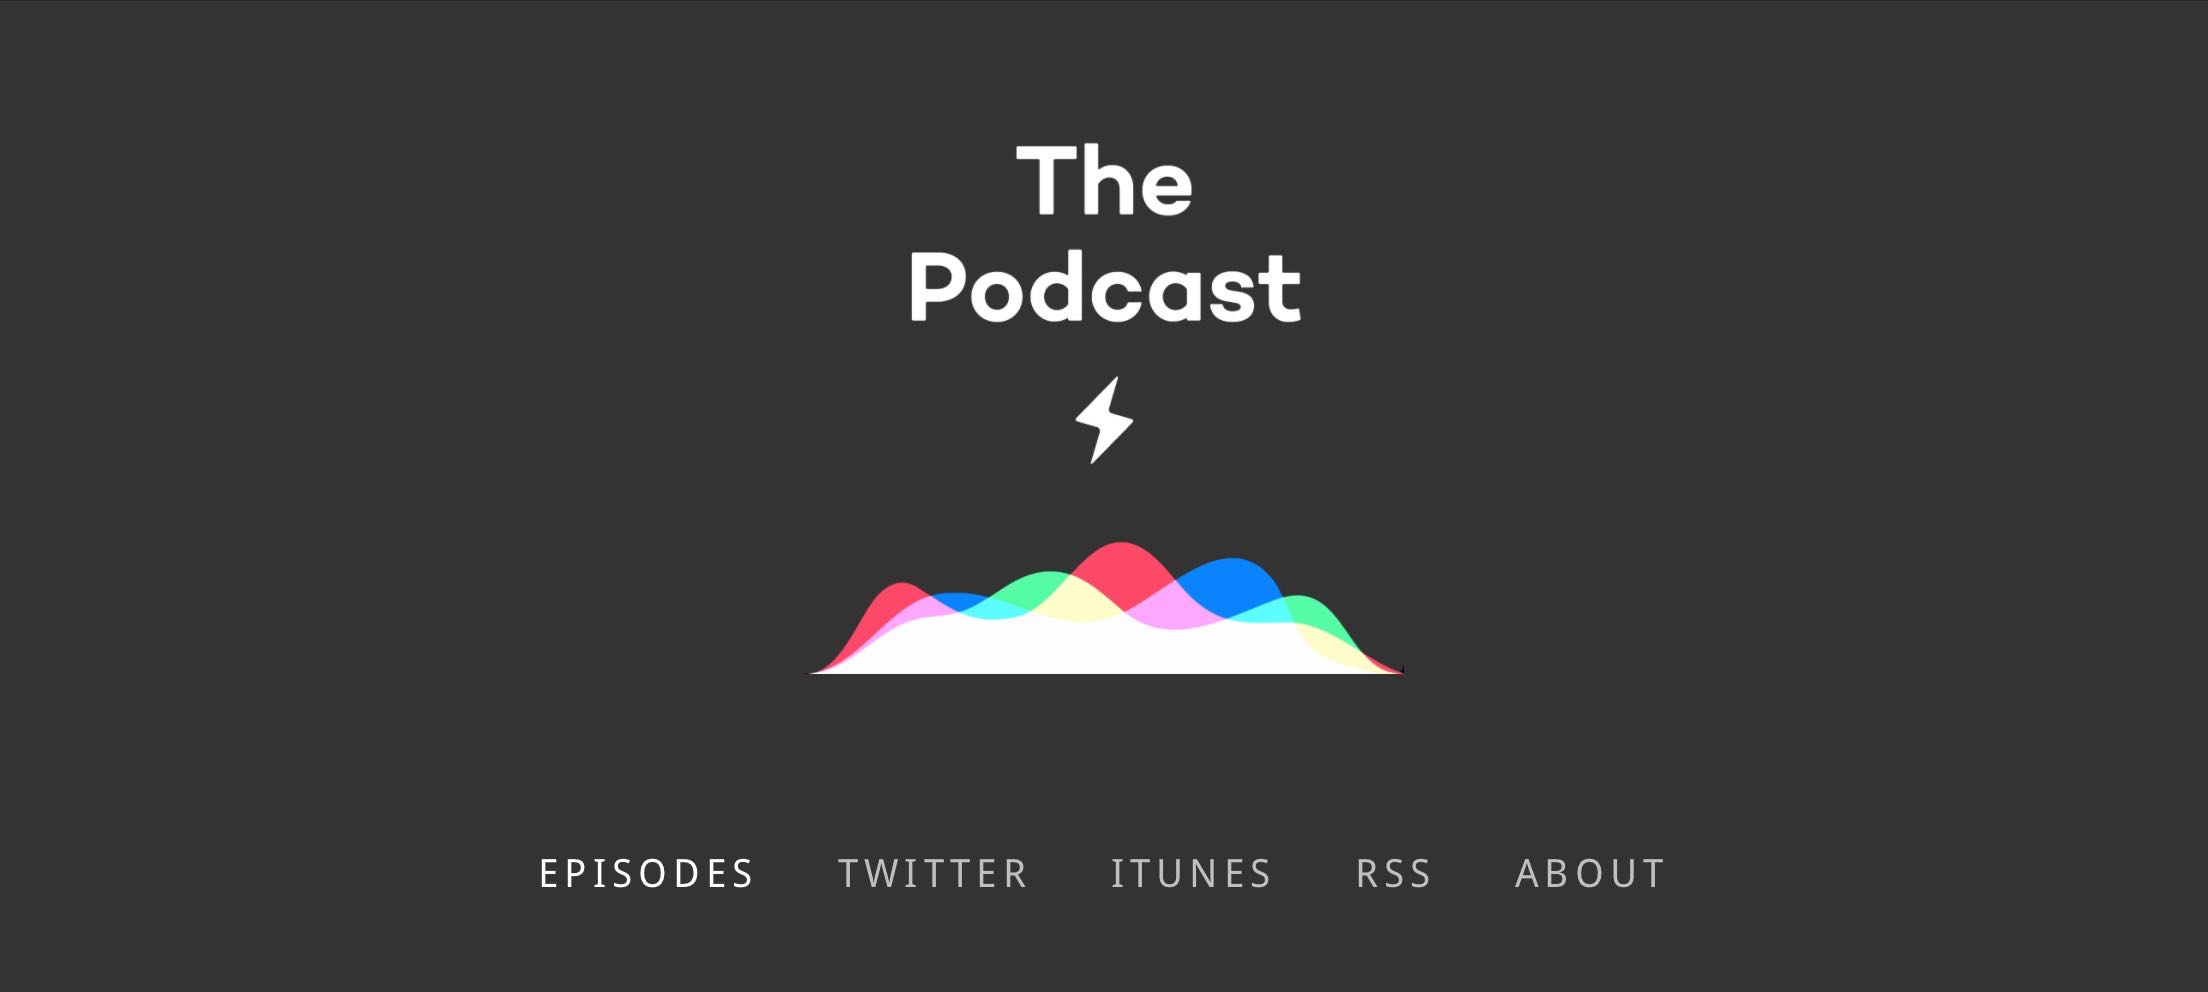 The Podcast - November 2017